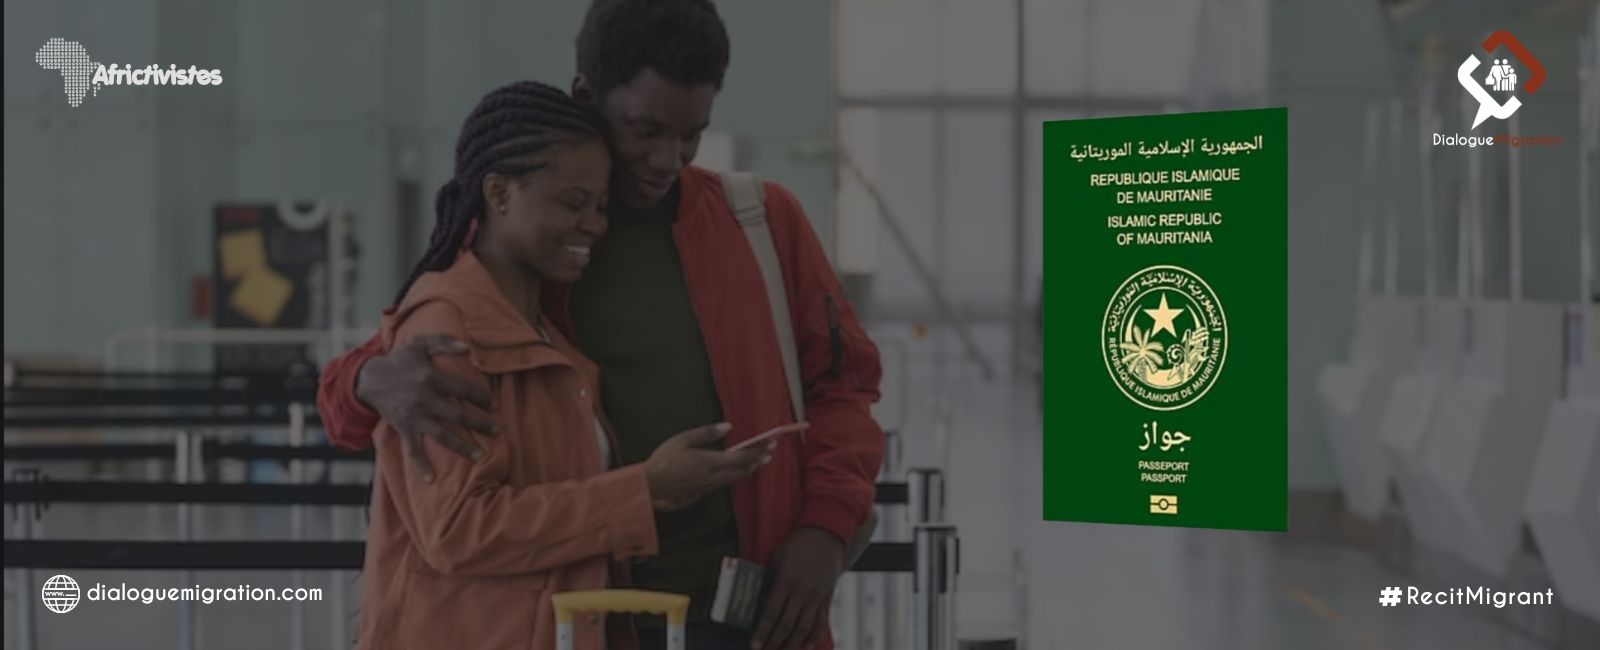 Mauritanian passport : mauritania passport shortage worries authorities